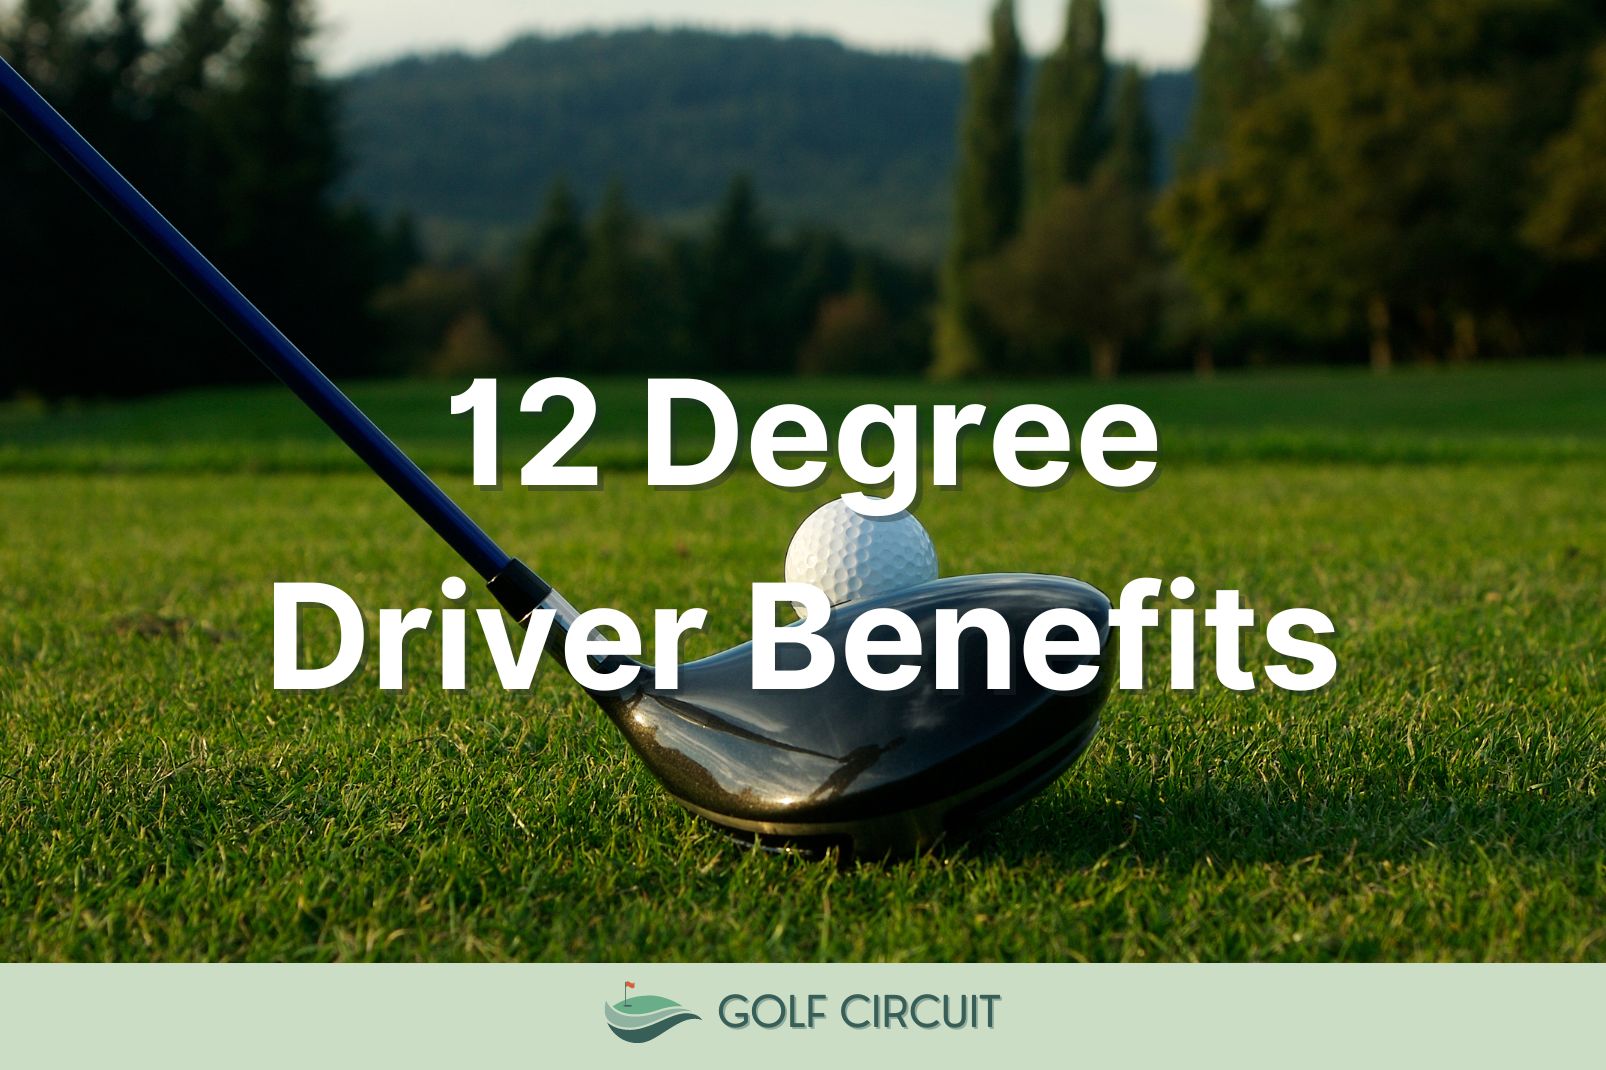 12 degree driver behind golf ball